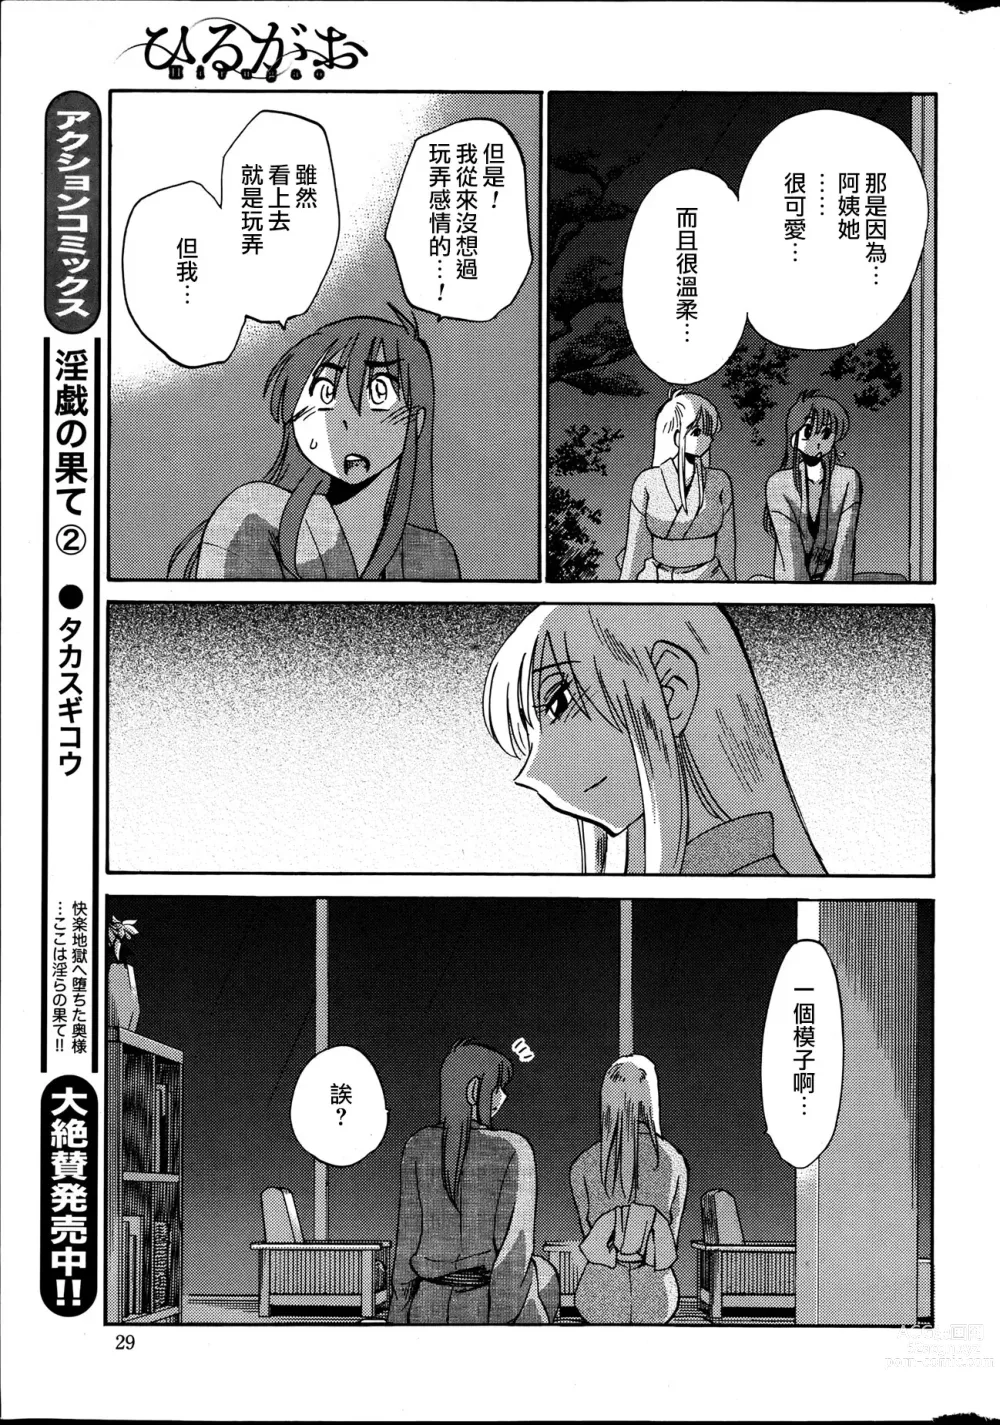 Page 151 of manga 昼颜 Ch. 9-16